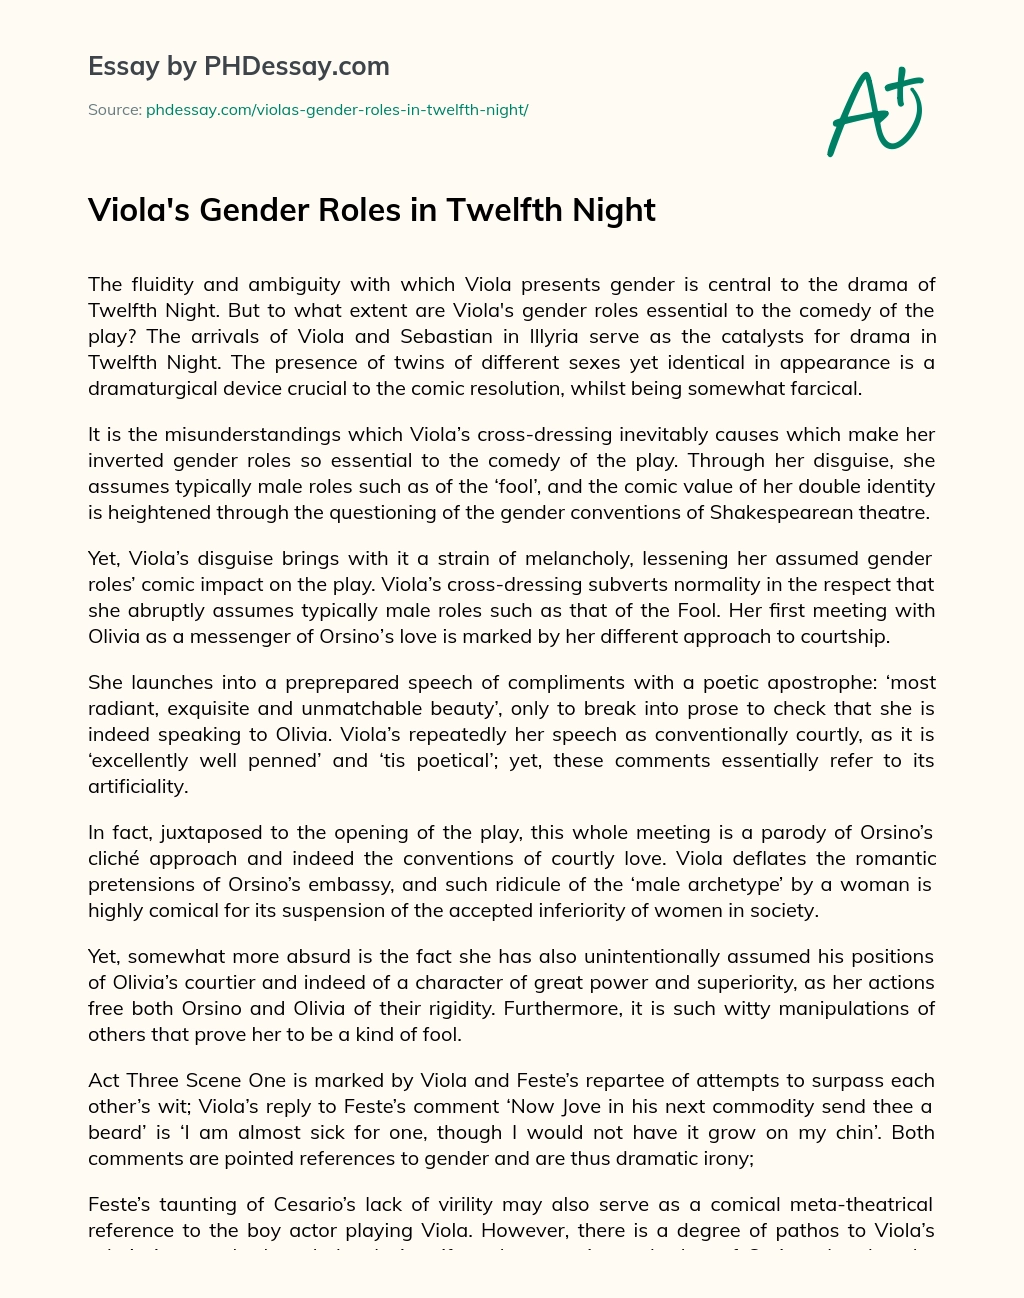 Viola’s Gender Roles in Twelfth Night essay